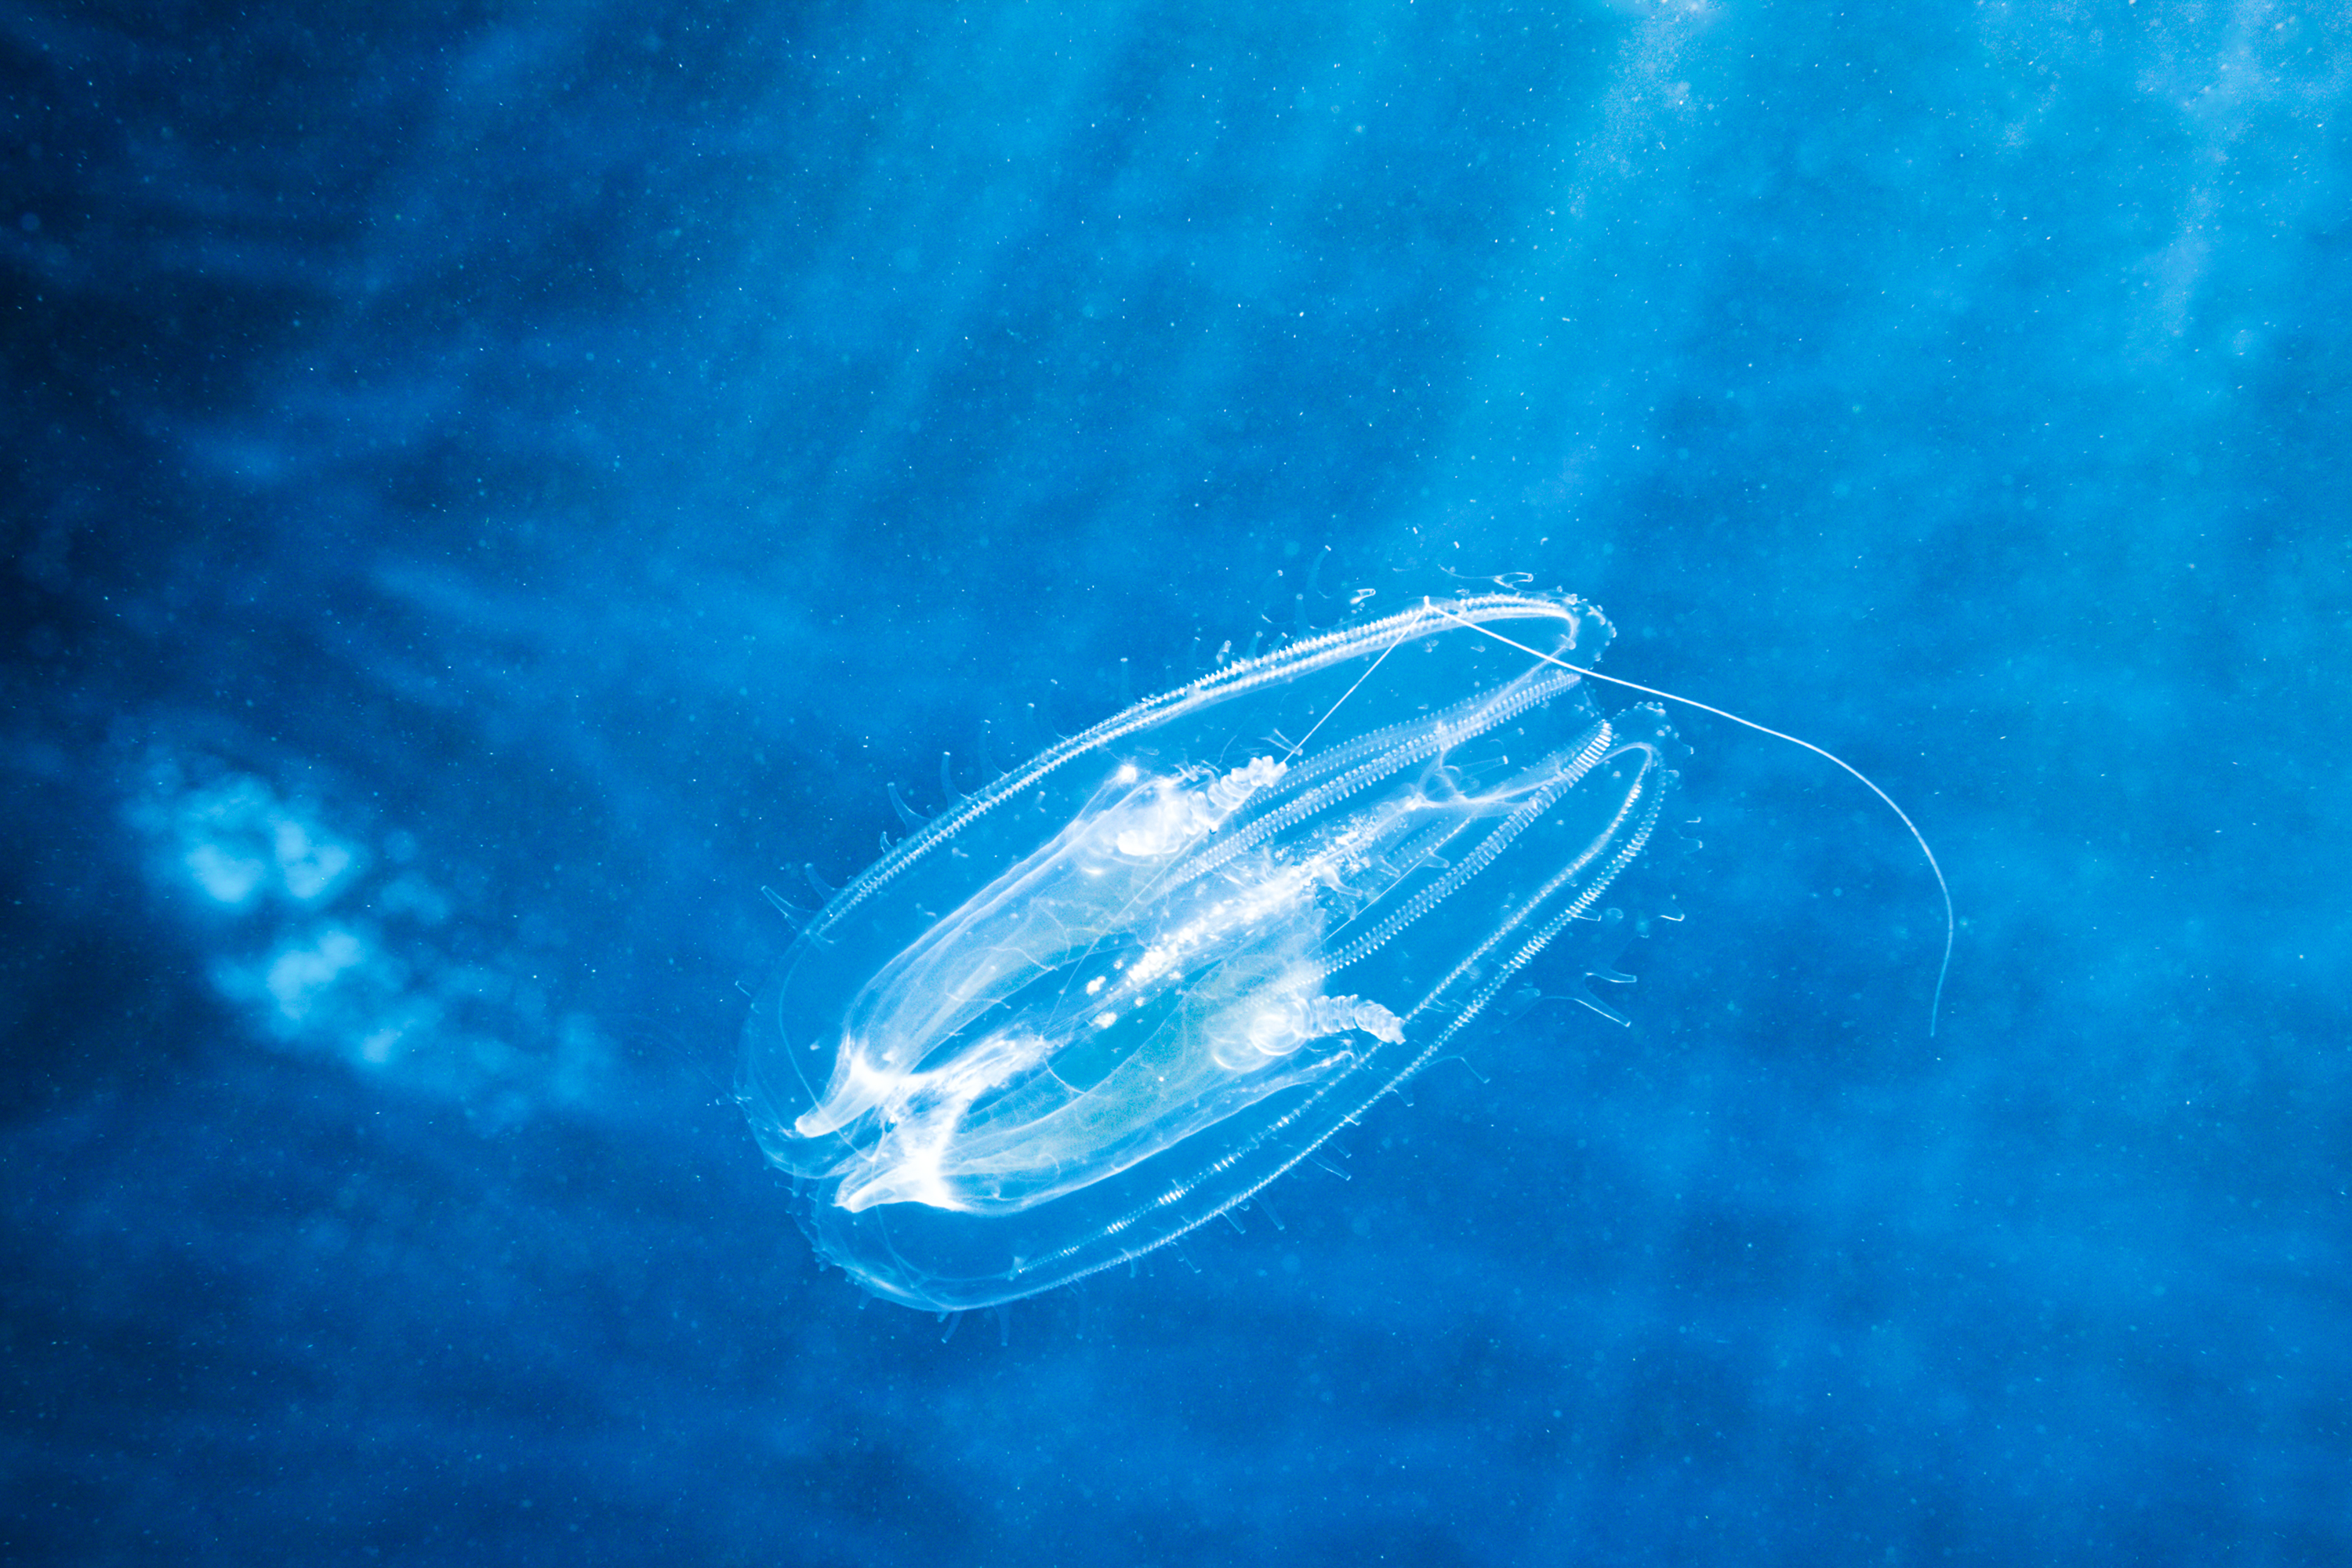 Exploring sea jellies on Connecticut's coastline and beyond